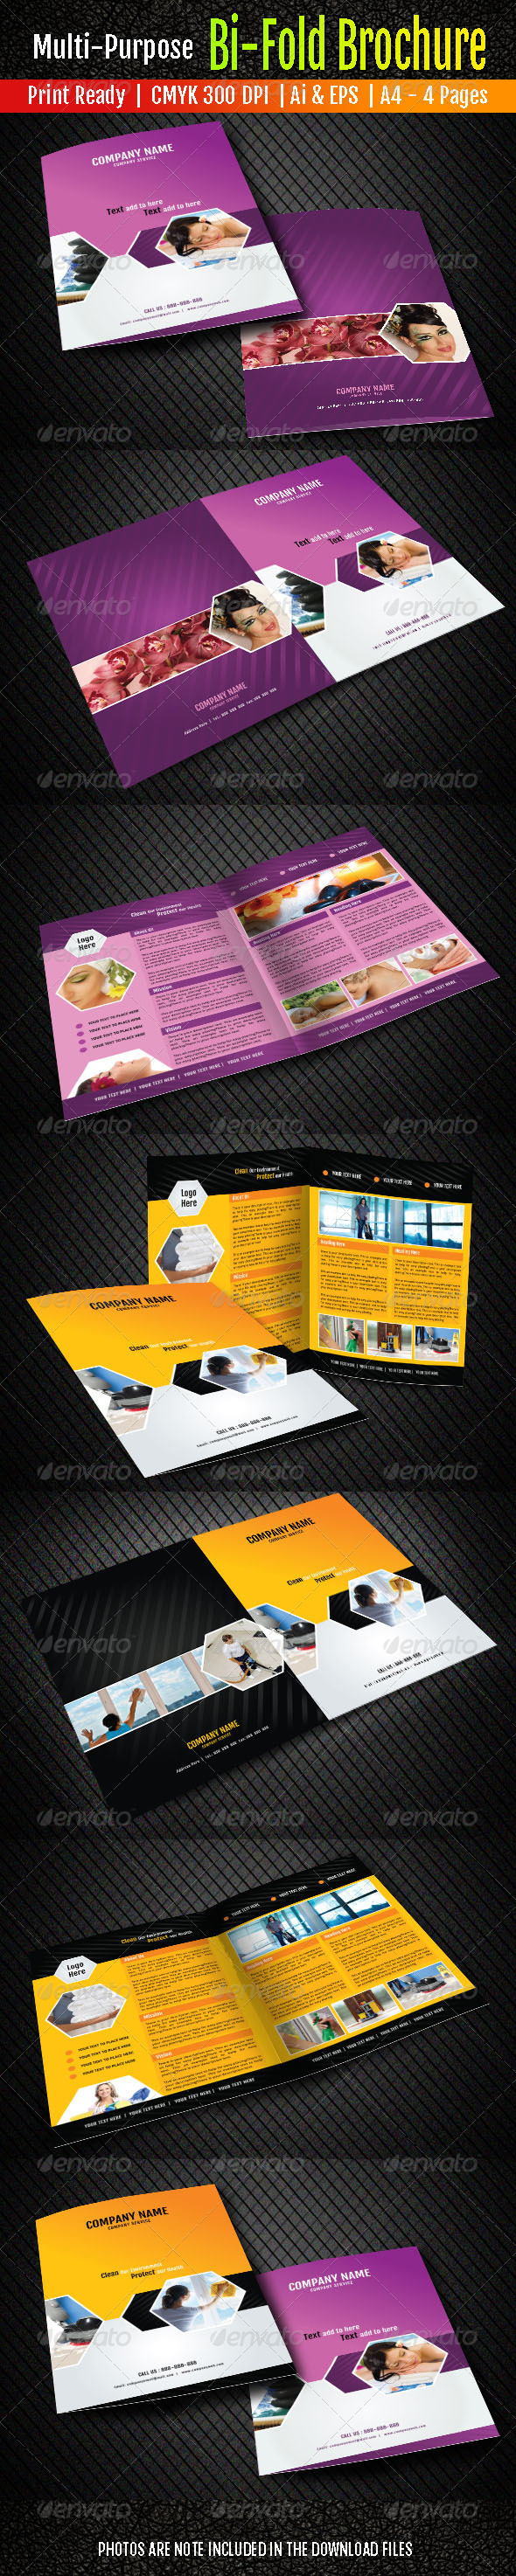 Bi-Fold Brochure by dreamia | GraphicRiver